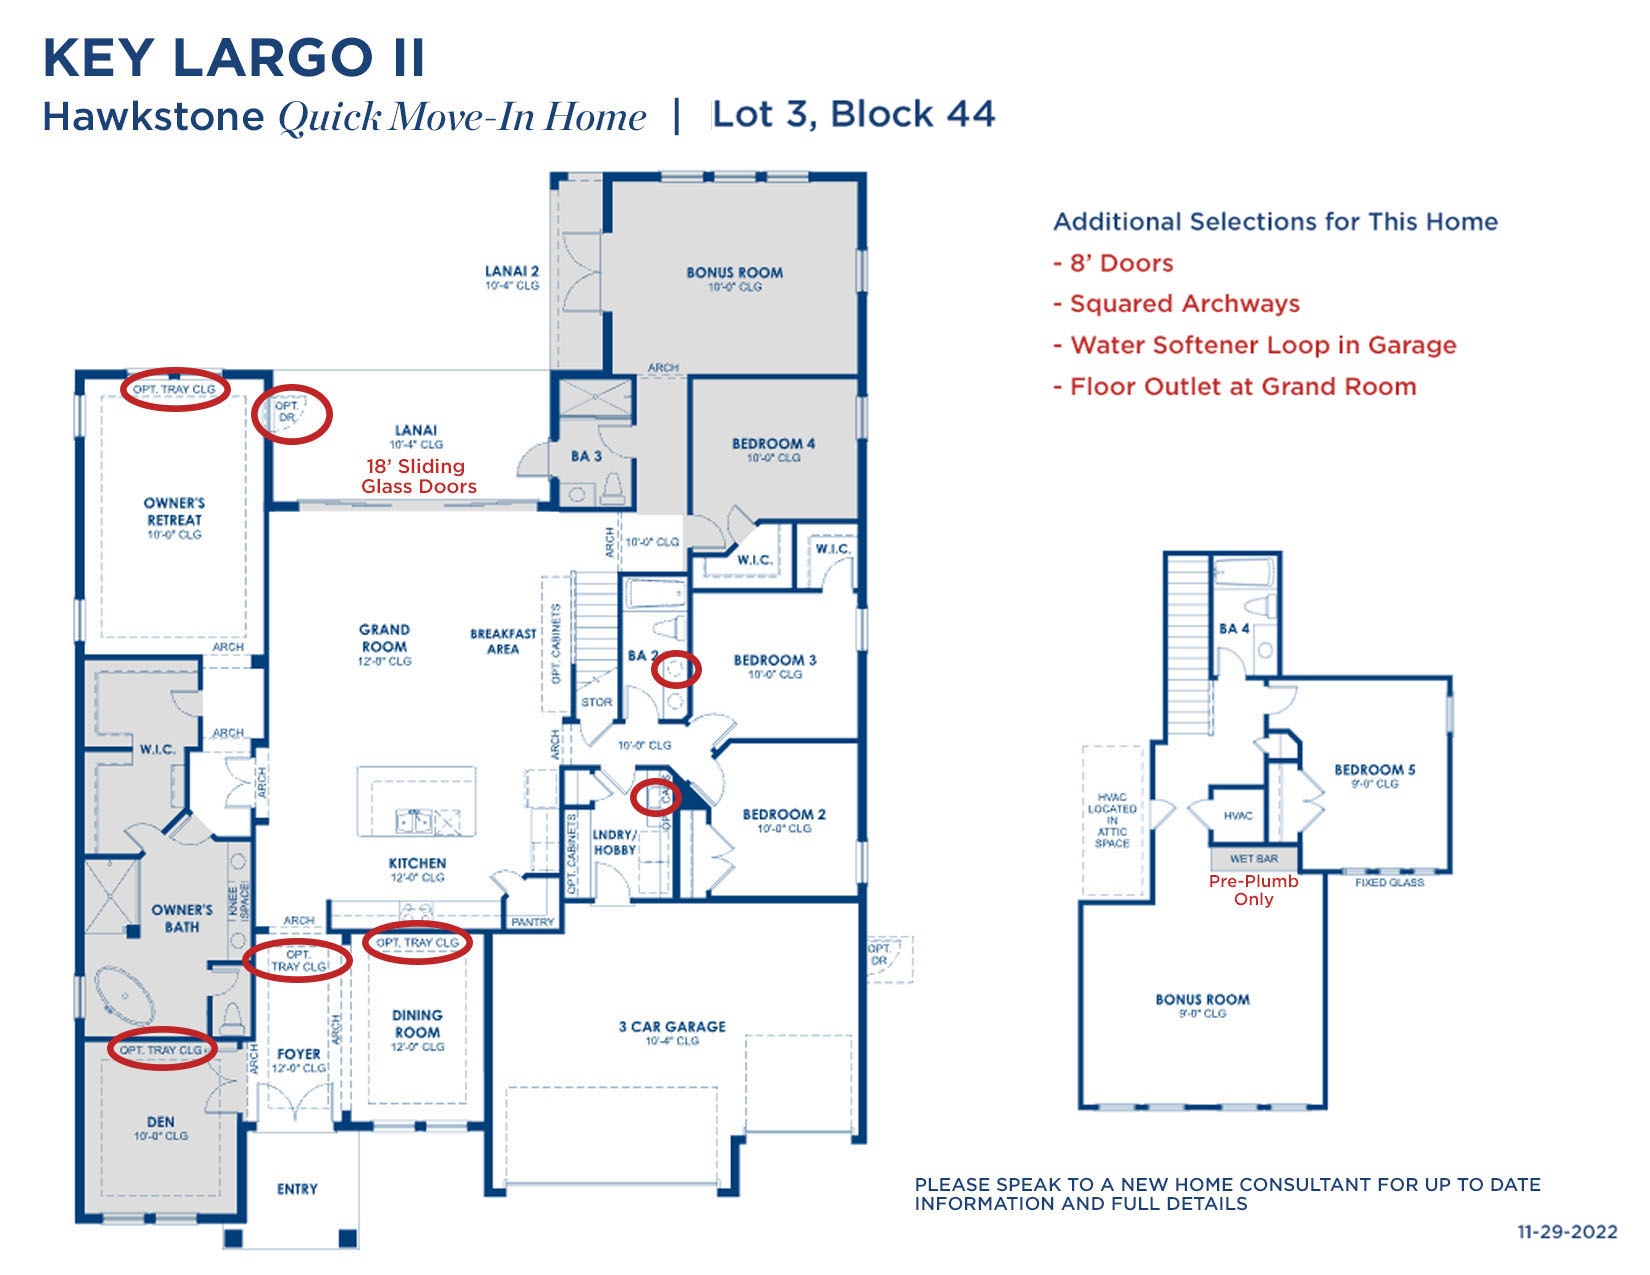 HS70 KEY LARGO II 3-44 112922 Floorplan